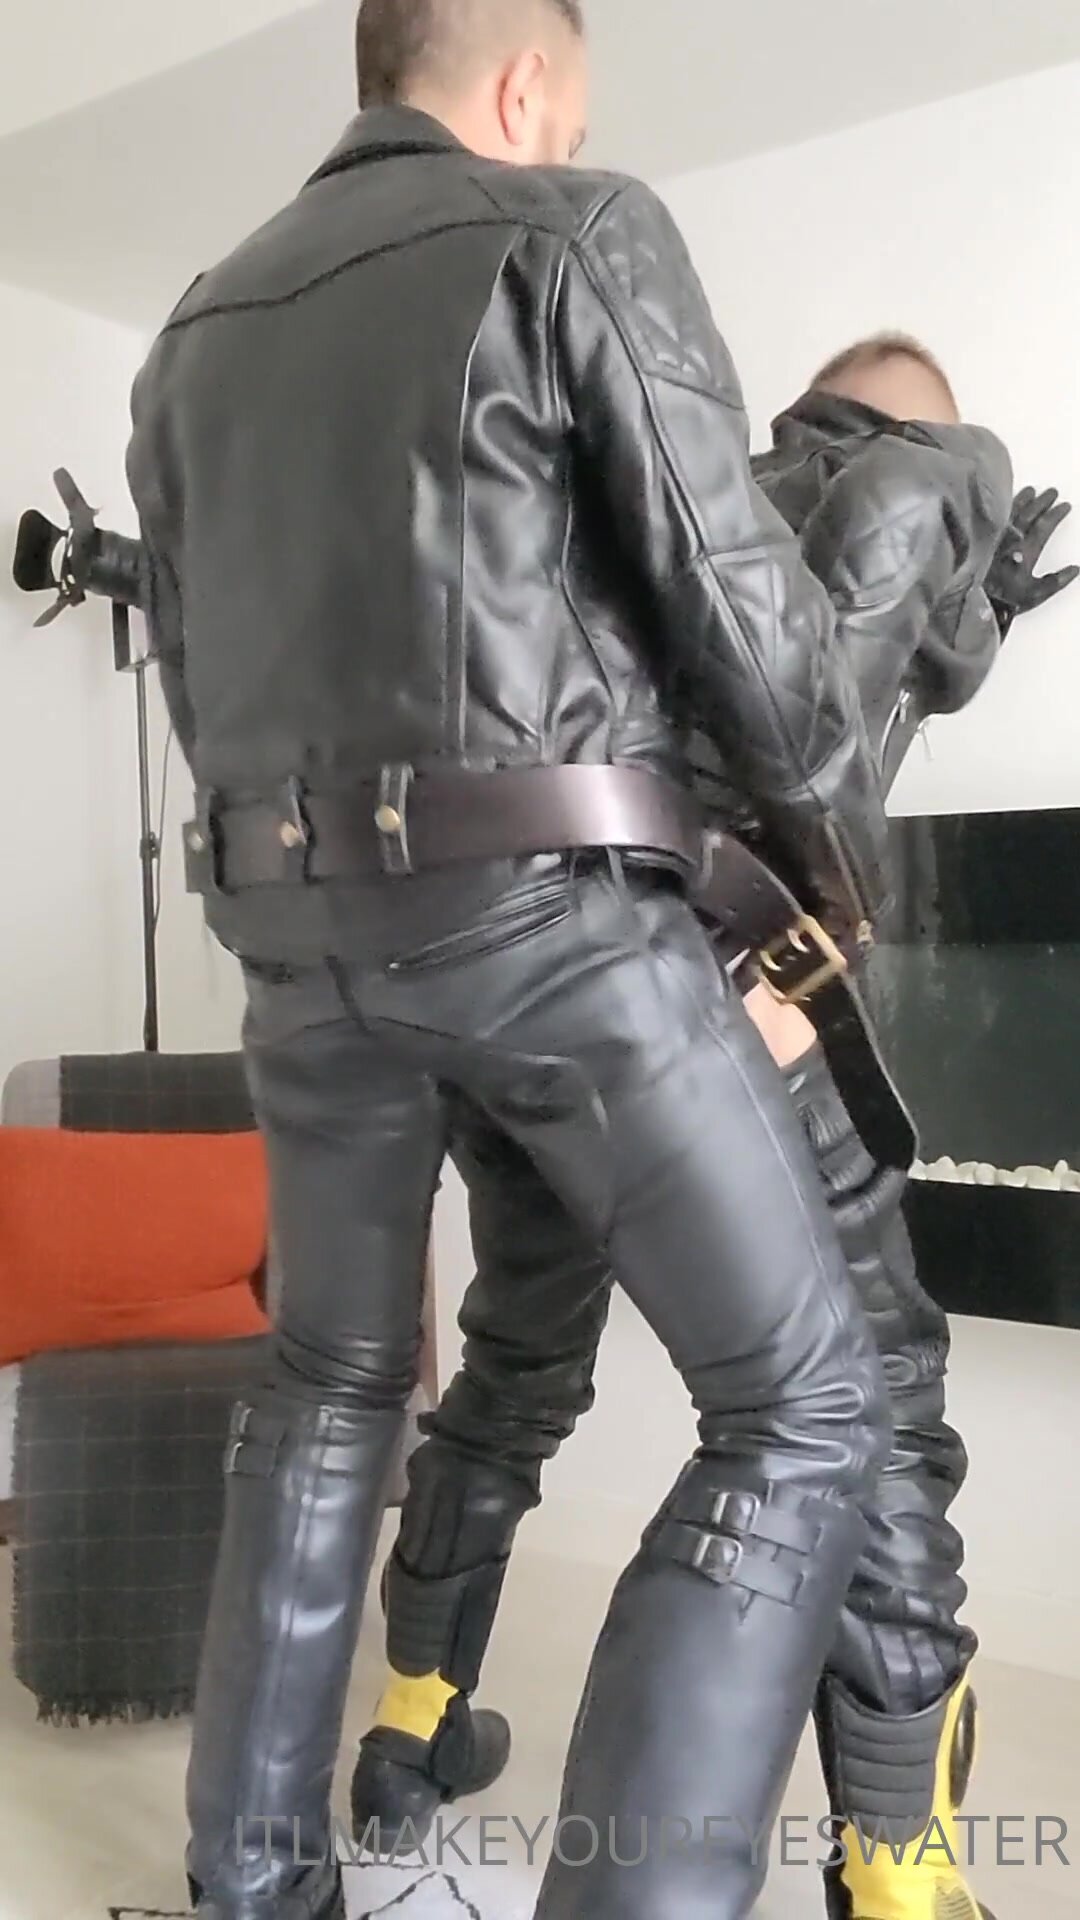 Leather master fucks biker boy